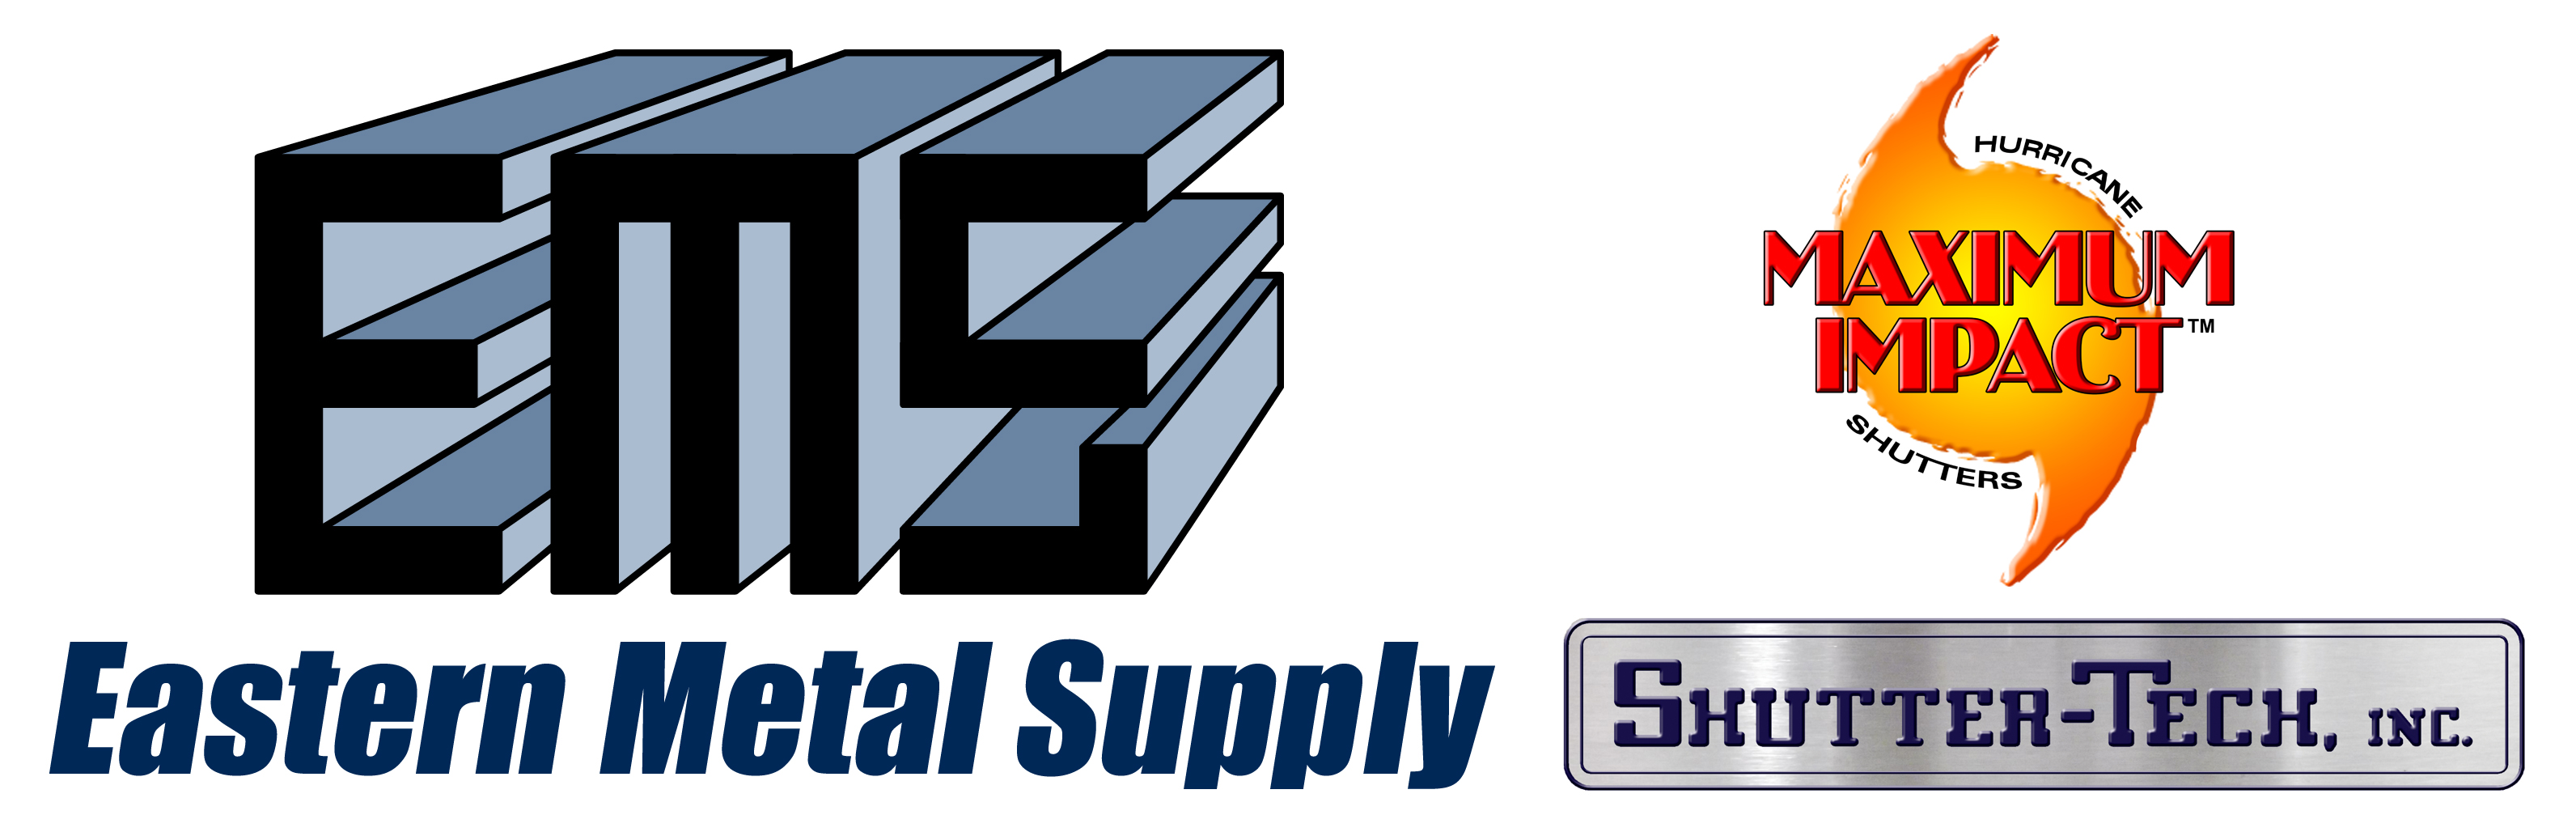 Eastern Metal Supply Acquires Shutter-Tech, Inc. | Newswire eastern metal supply lakeland fl